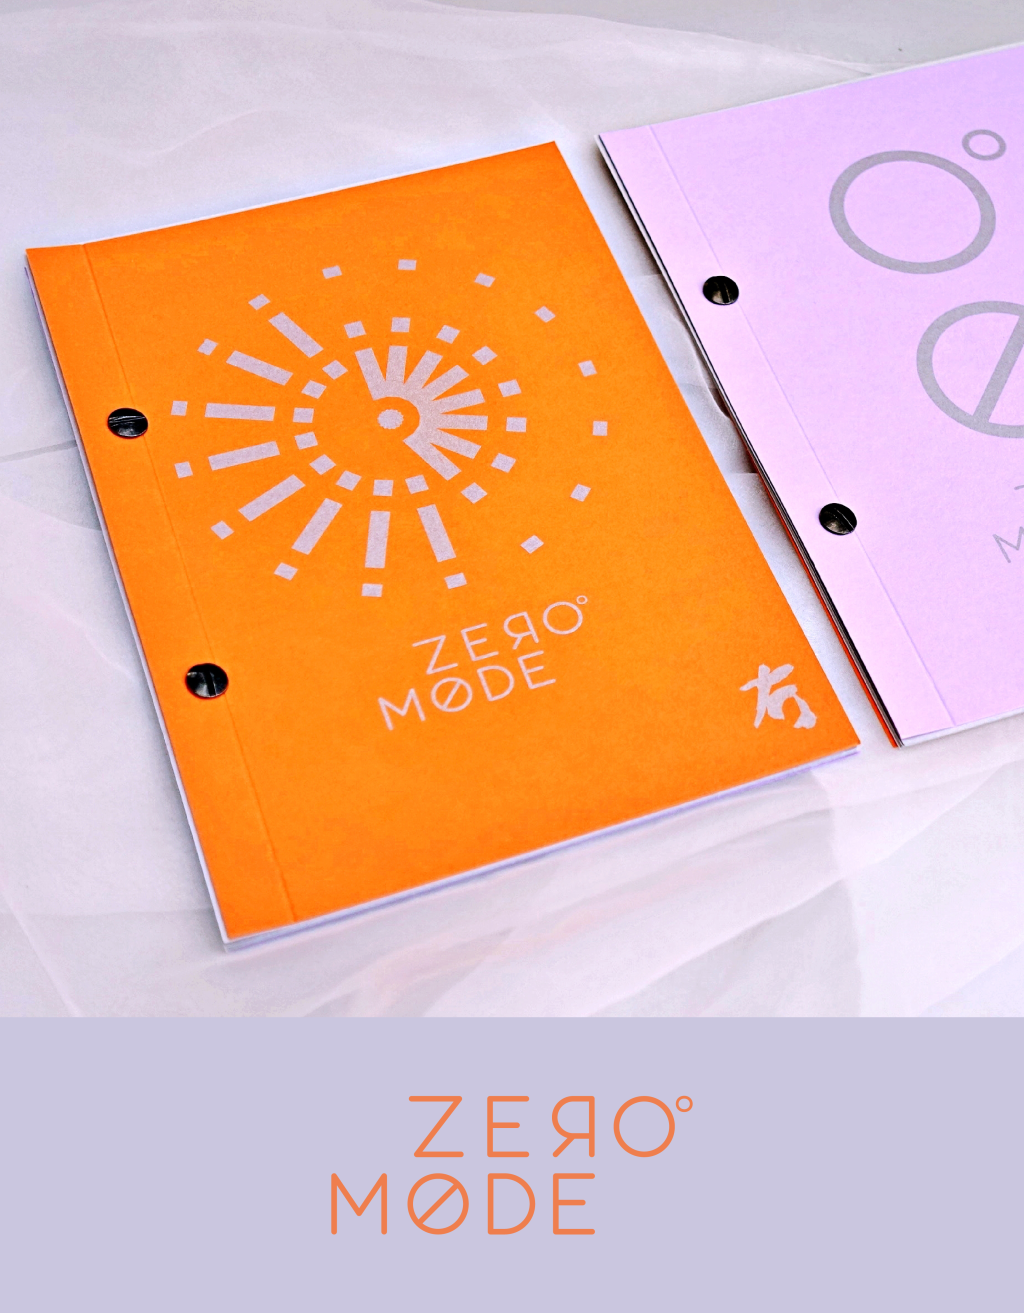 Zero Mode – applications